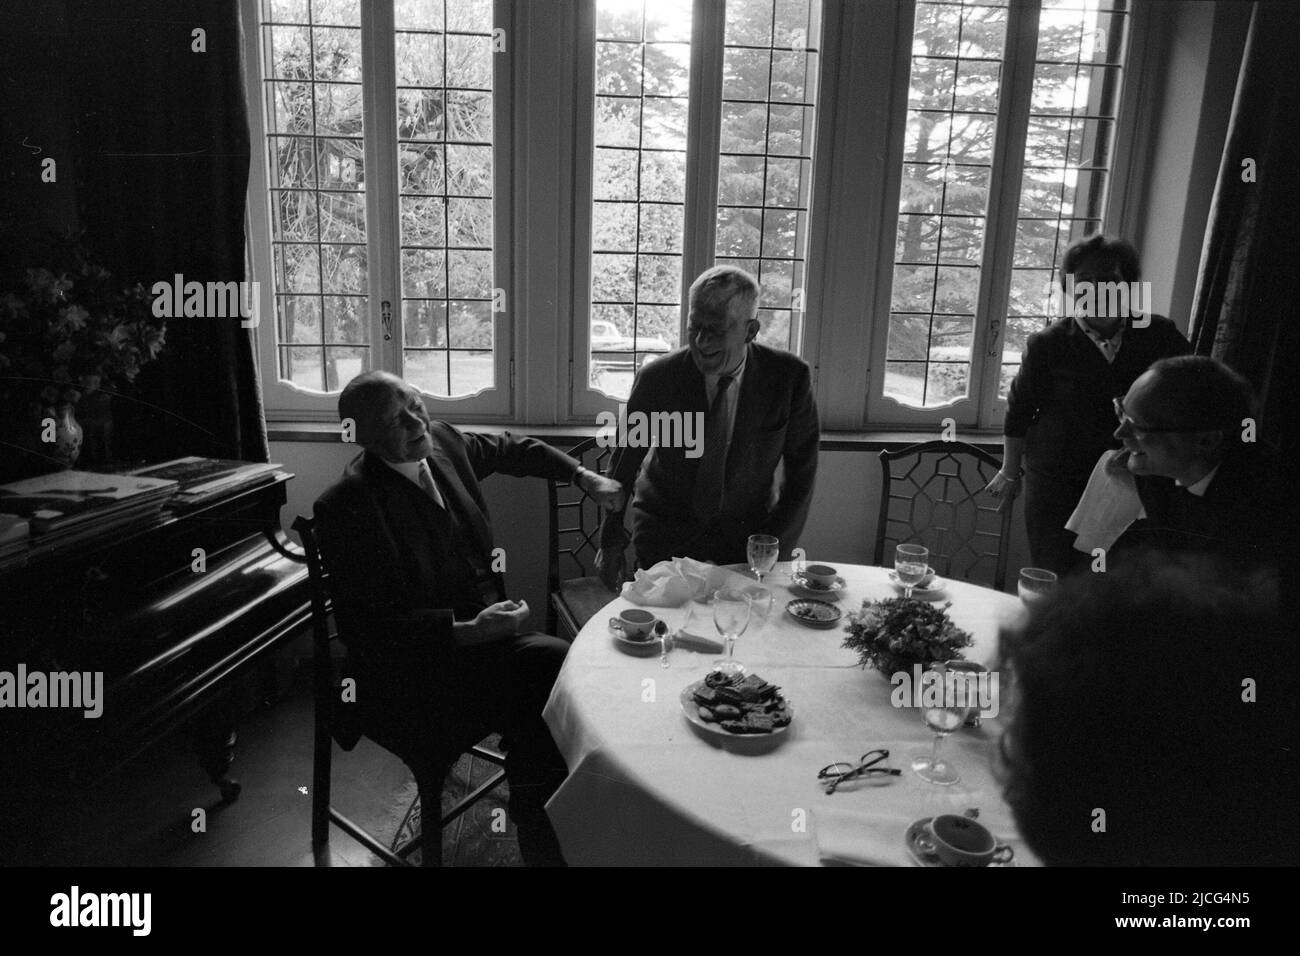 Oskar KOKOSCHKA (centre), Austria, painter, sits with his wife Olda and former Federal Chancellor Konrad ADENAUER, CDU, at a table, coffee table, they joke, friendly, April 15, 1966 Stock Photo